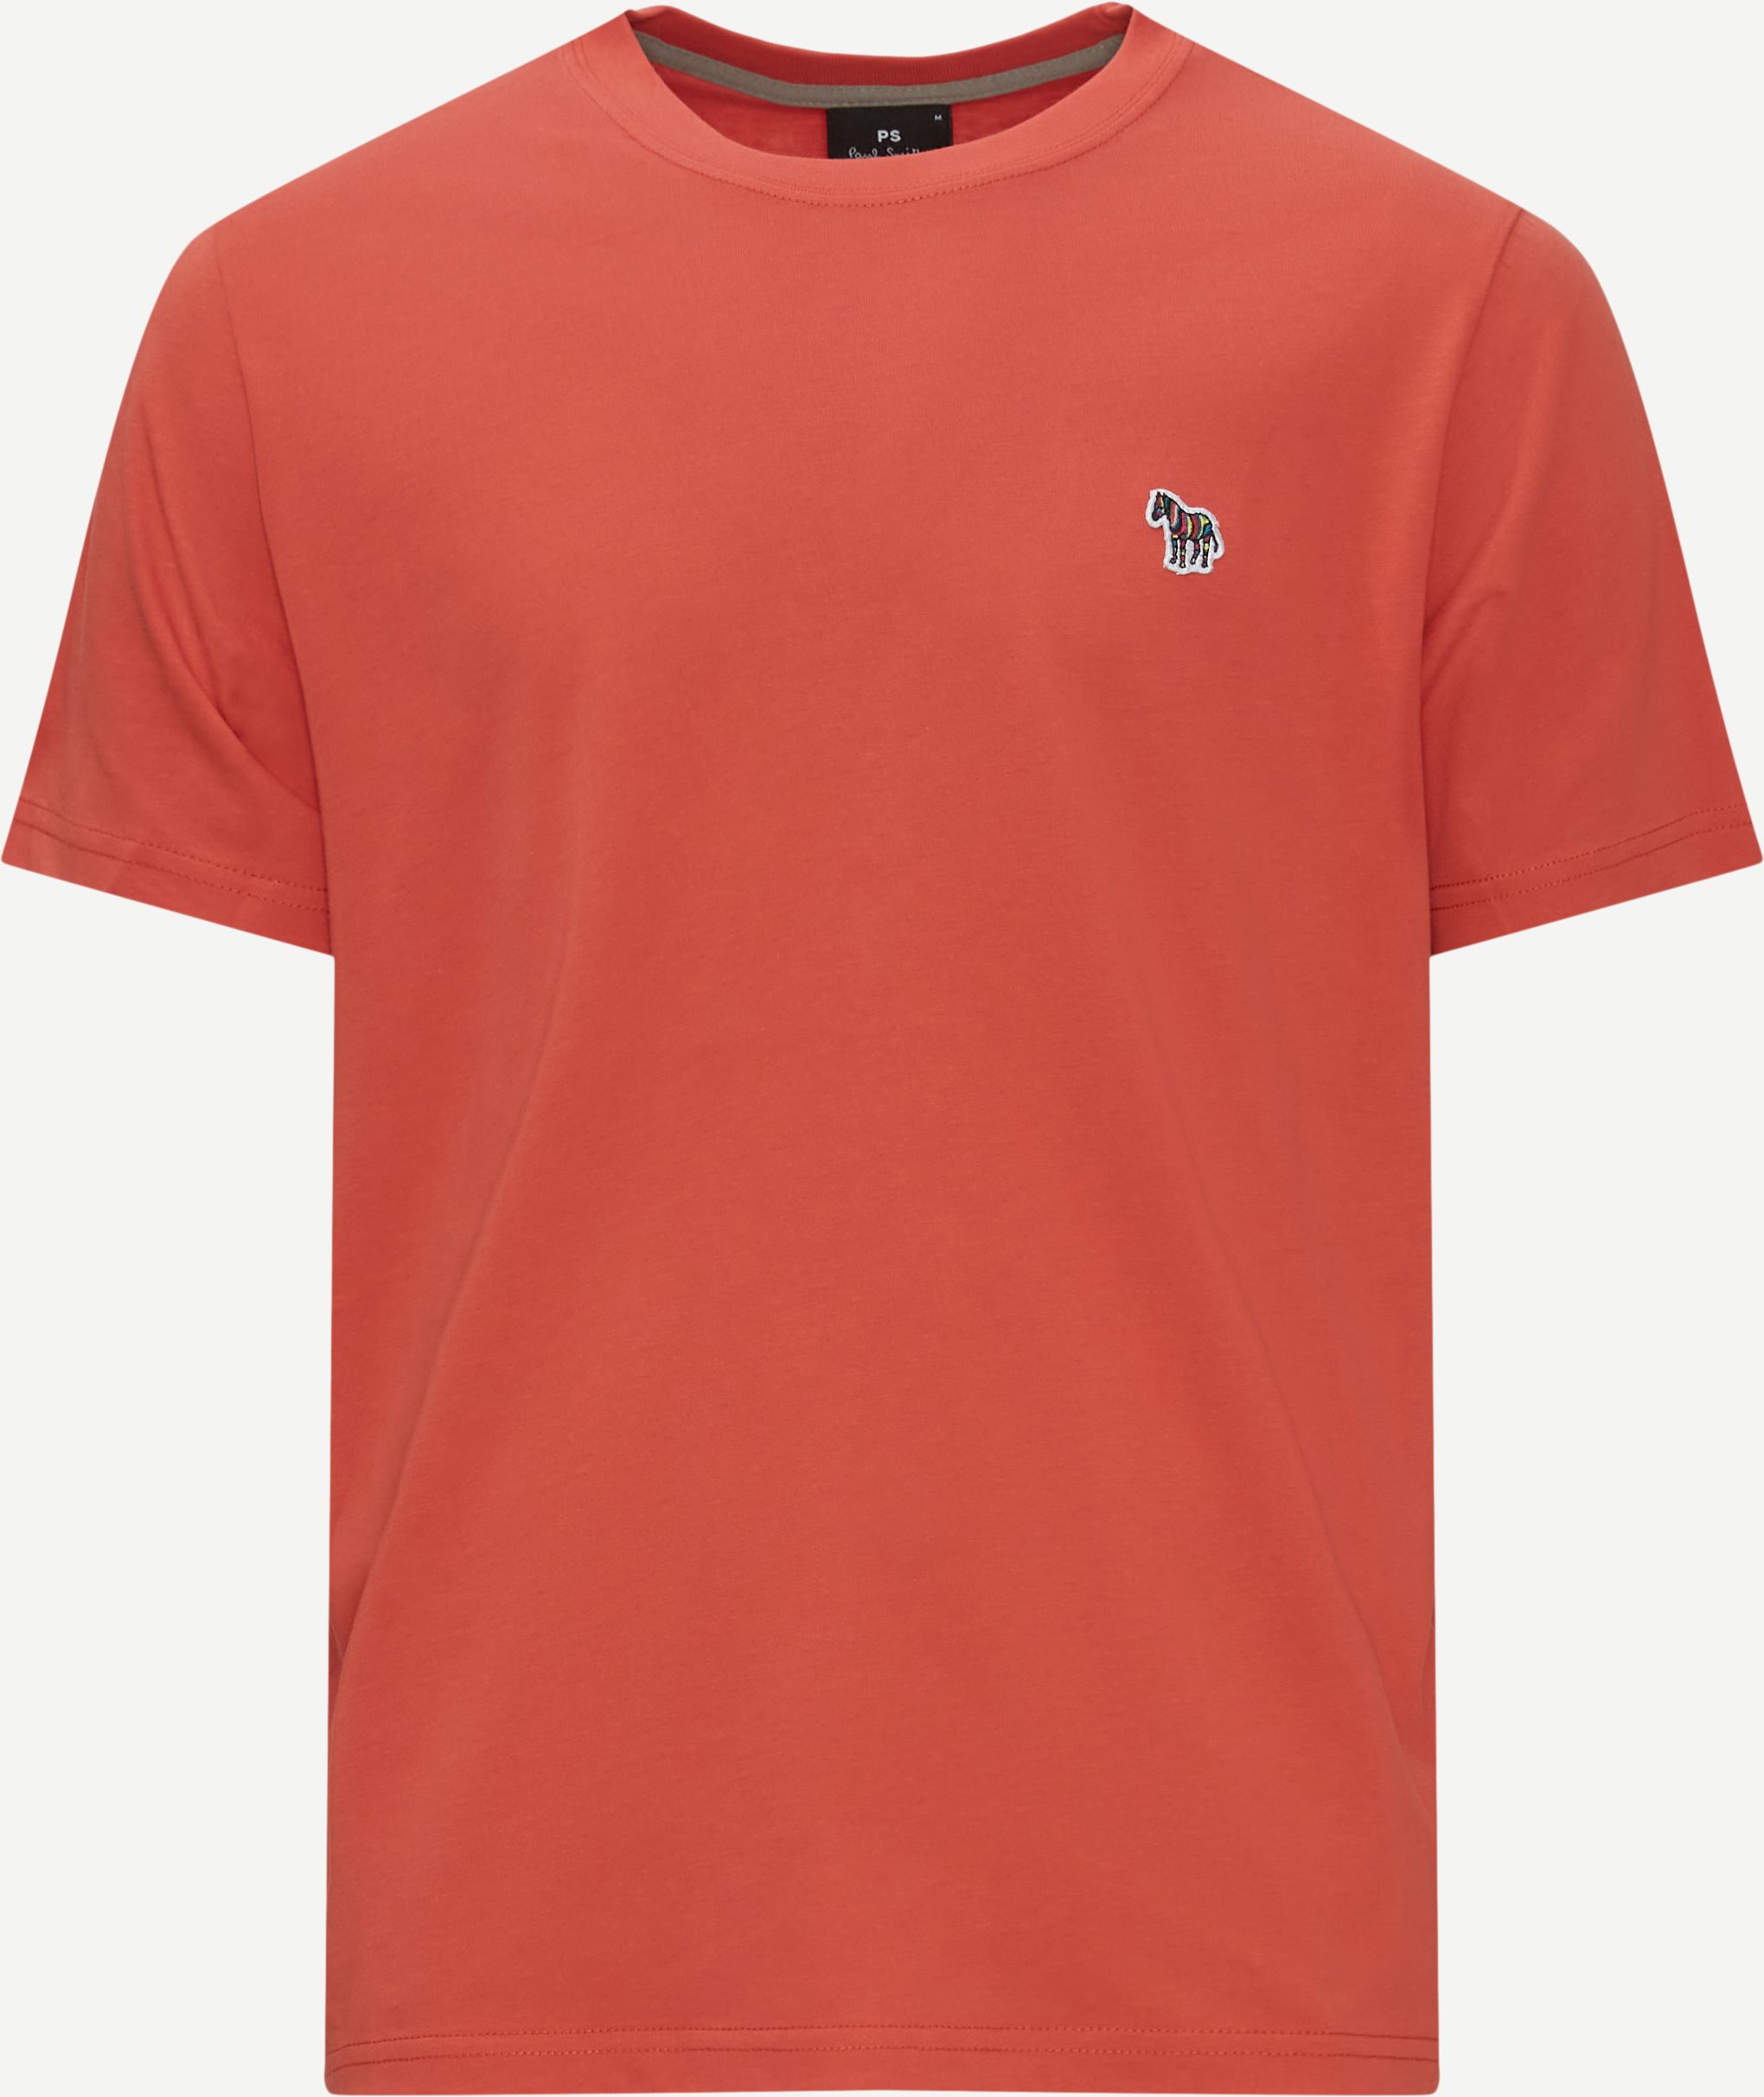 Zebra Badge T-shirt - T-shirts - Regular fit - Orange